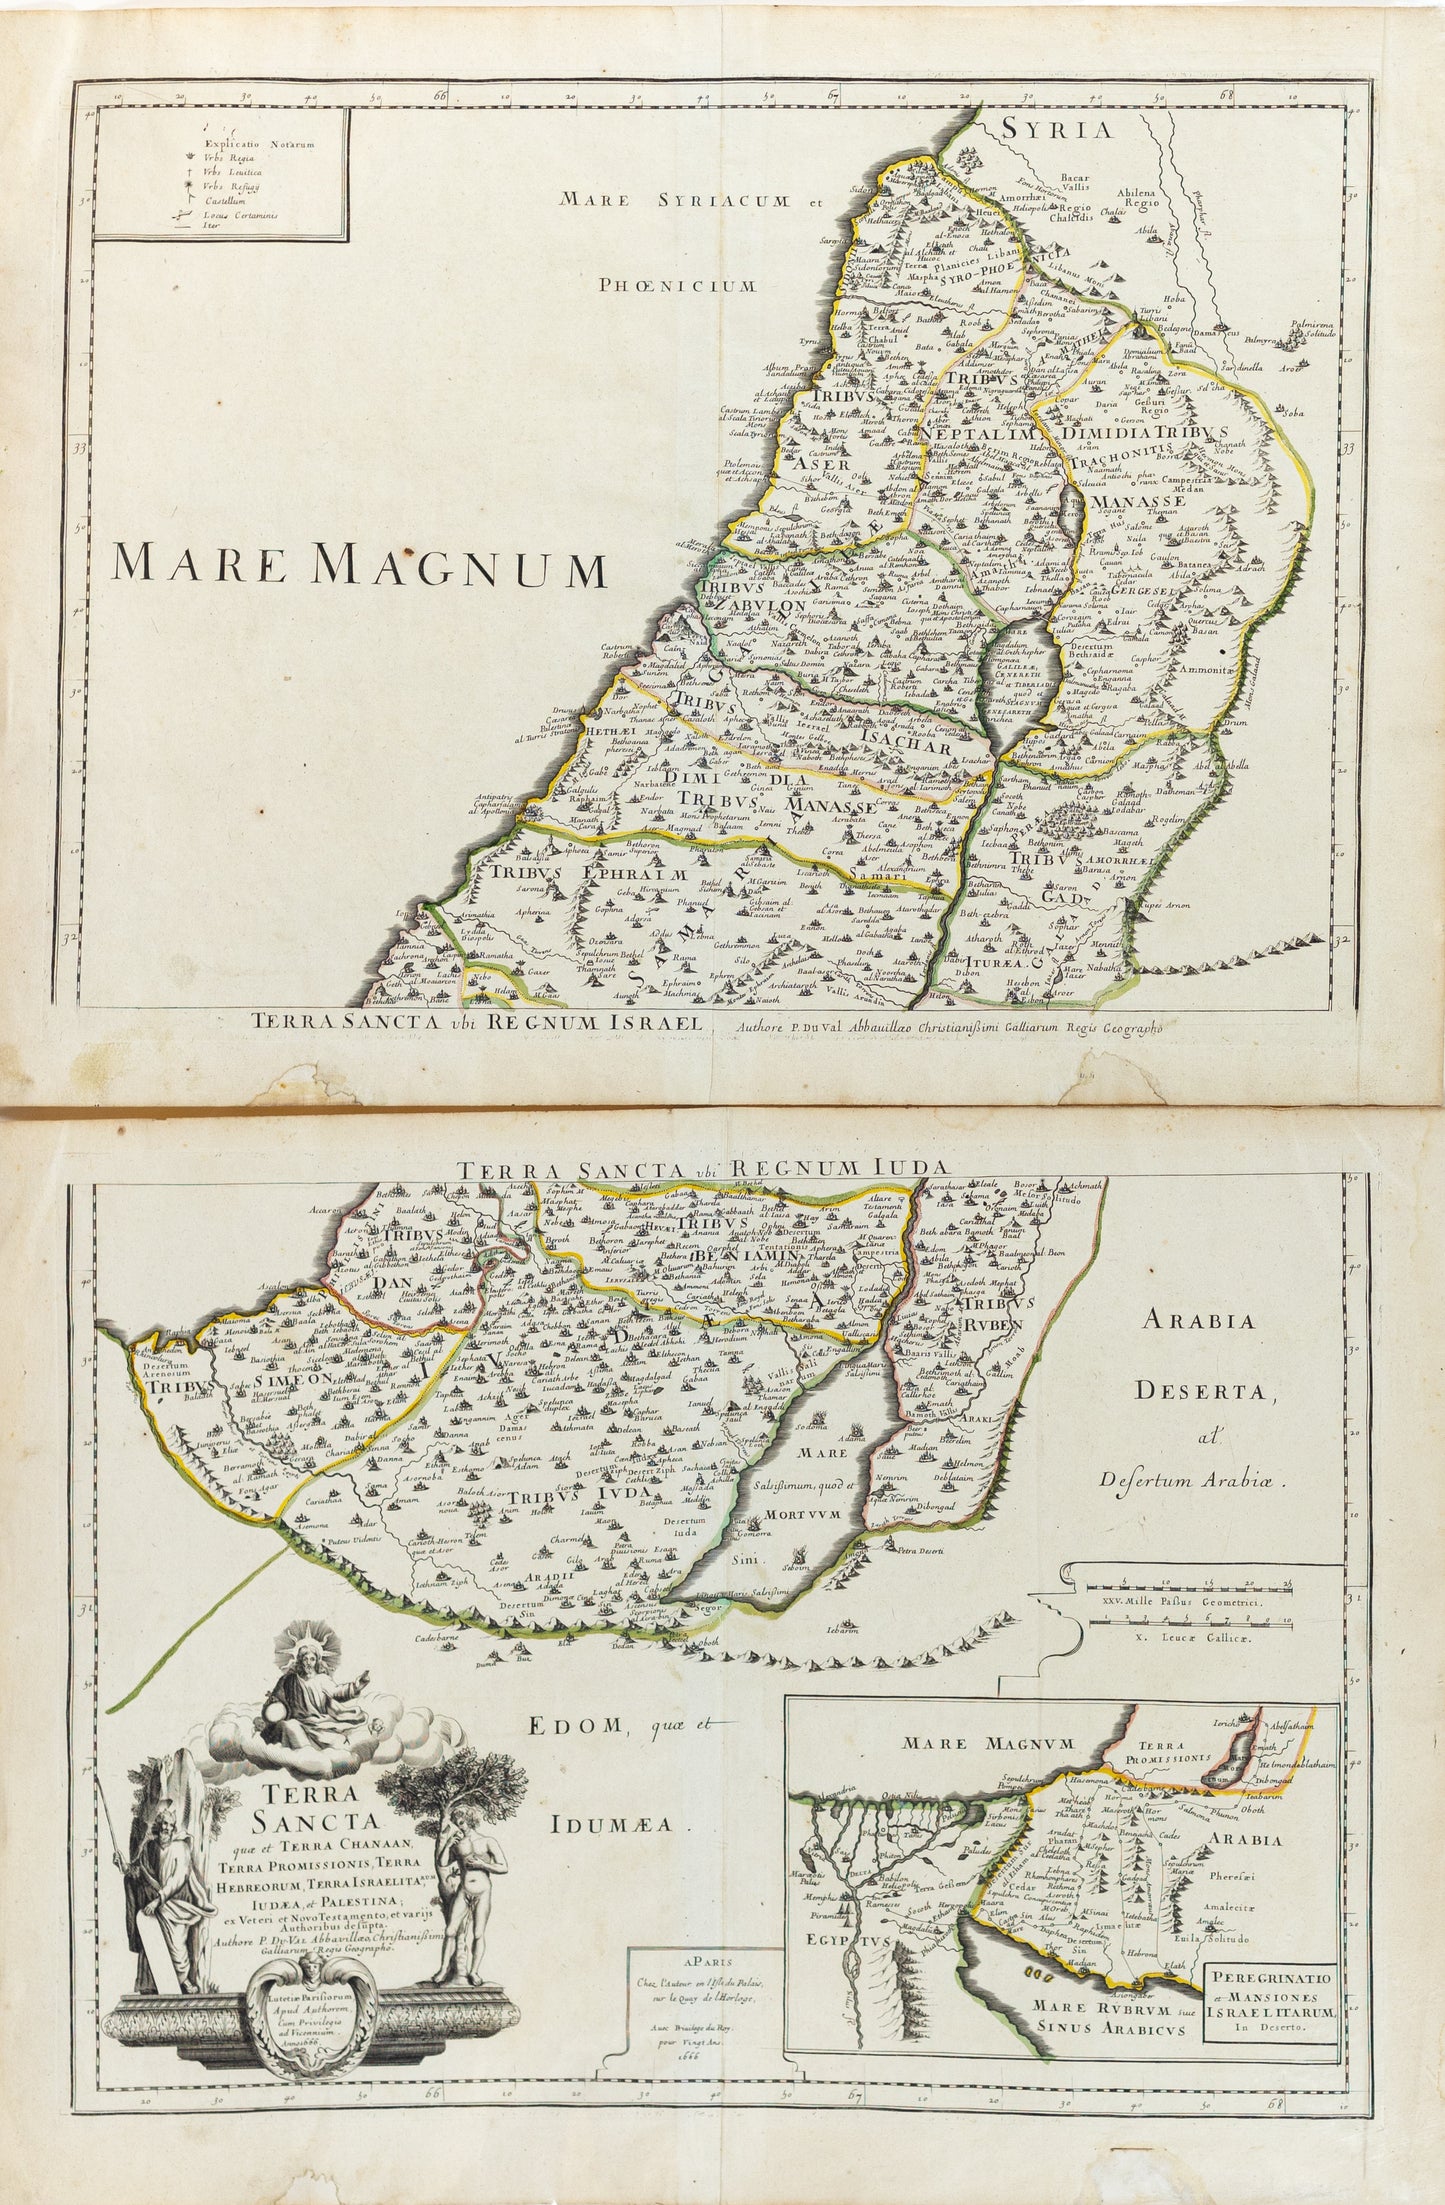 Duval, Pierre. Terra Sancta que et Terra Chanaan Terra Promissionis, Terra Hebreorum, Terra Israelita, Iudea, et Palestina. Paris: 1666